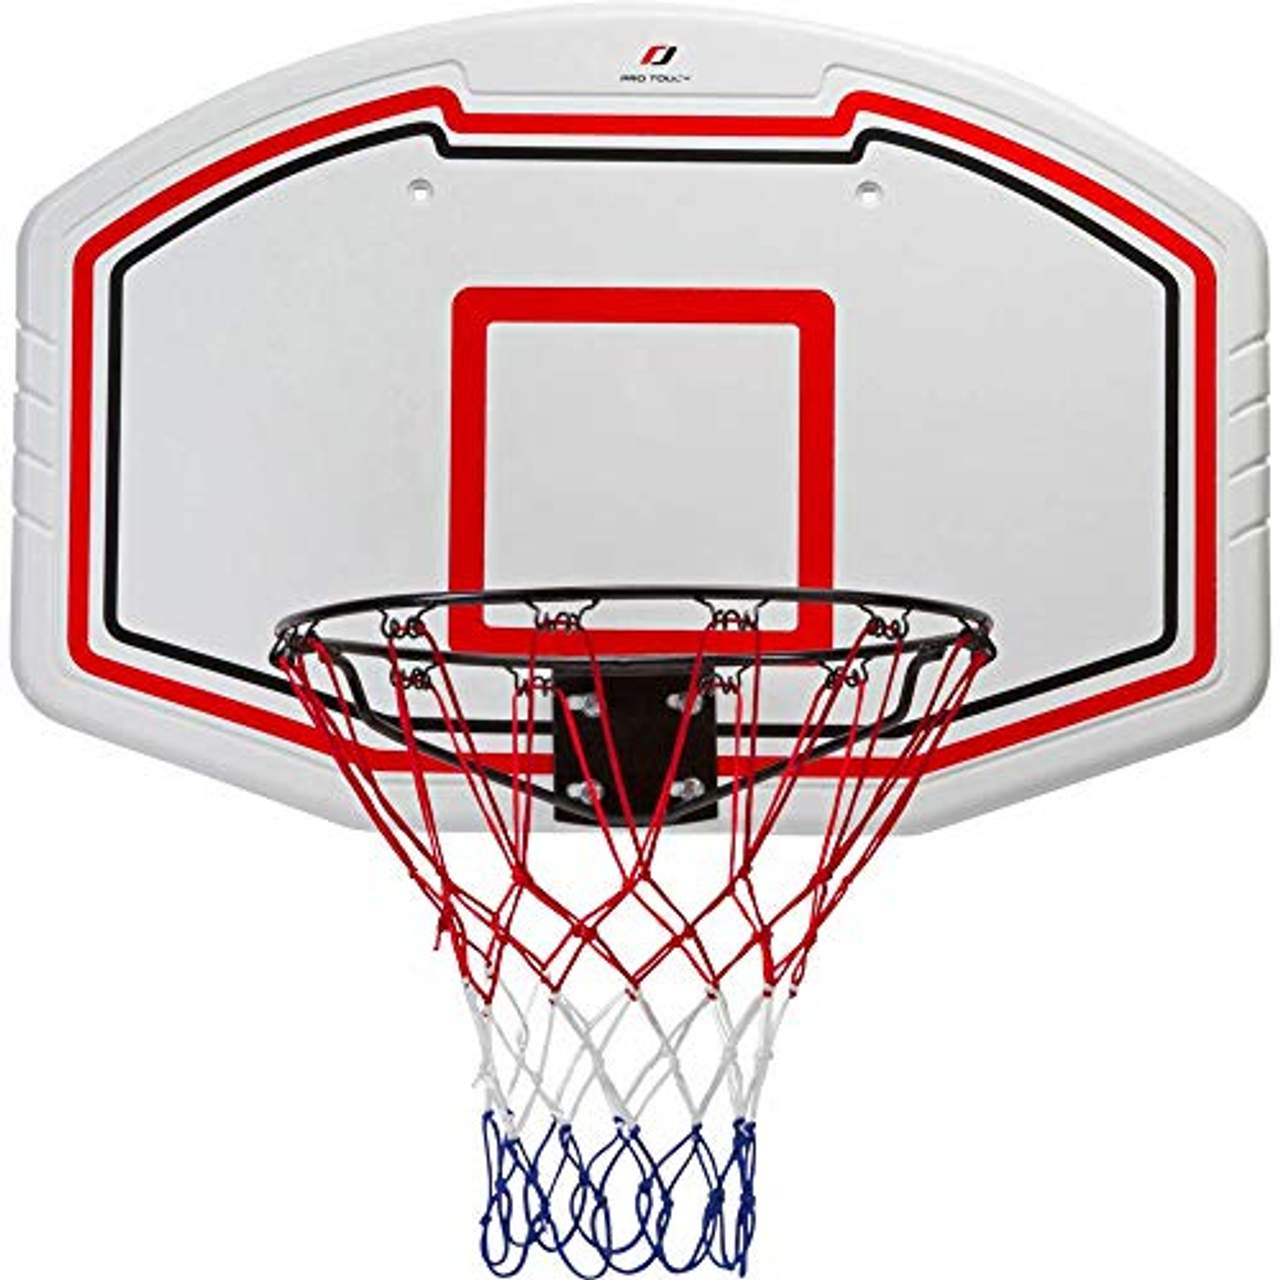 Pro Touch Basketball-Board Set-71685100001 Badminton